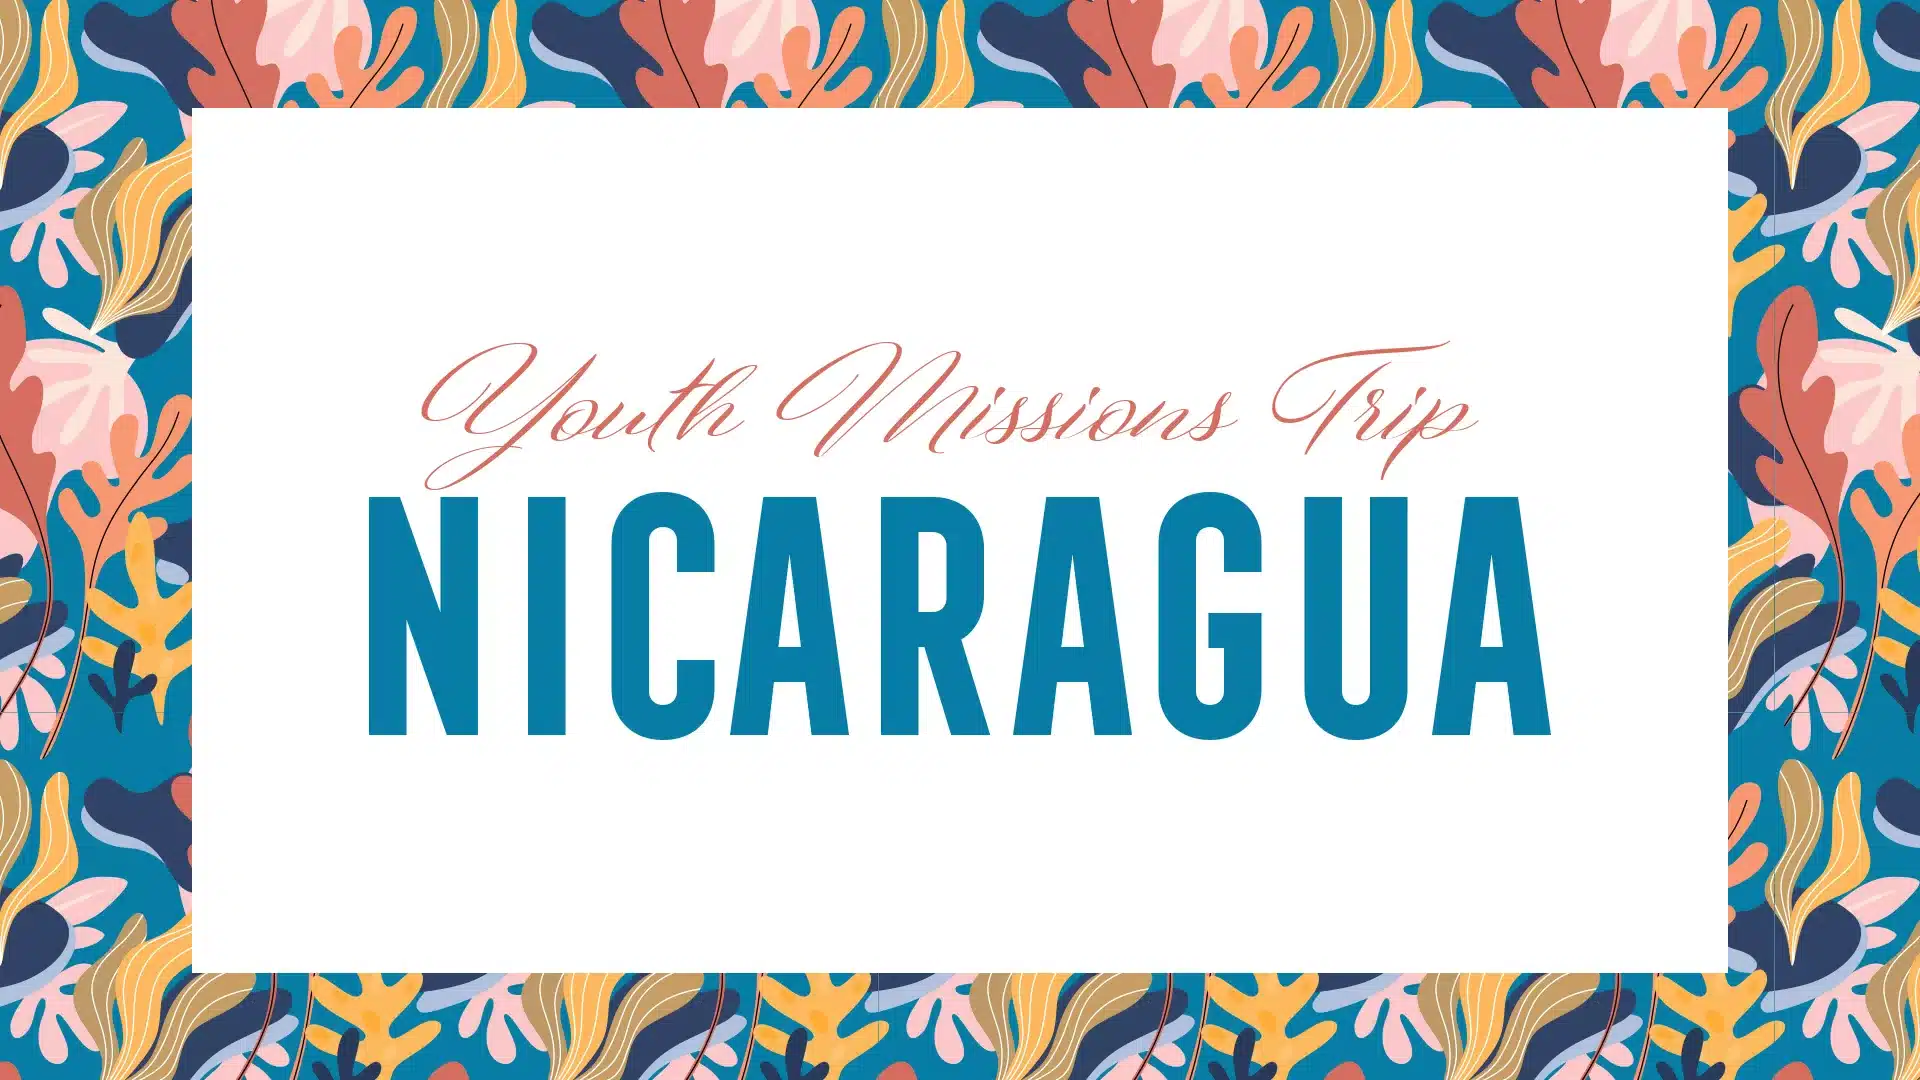 Youth Nicaragua Trip